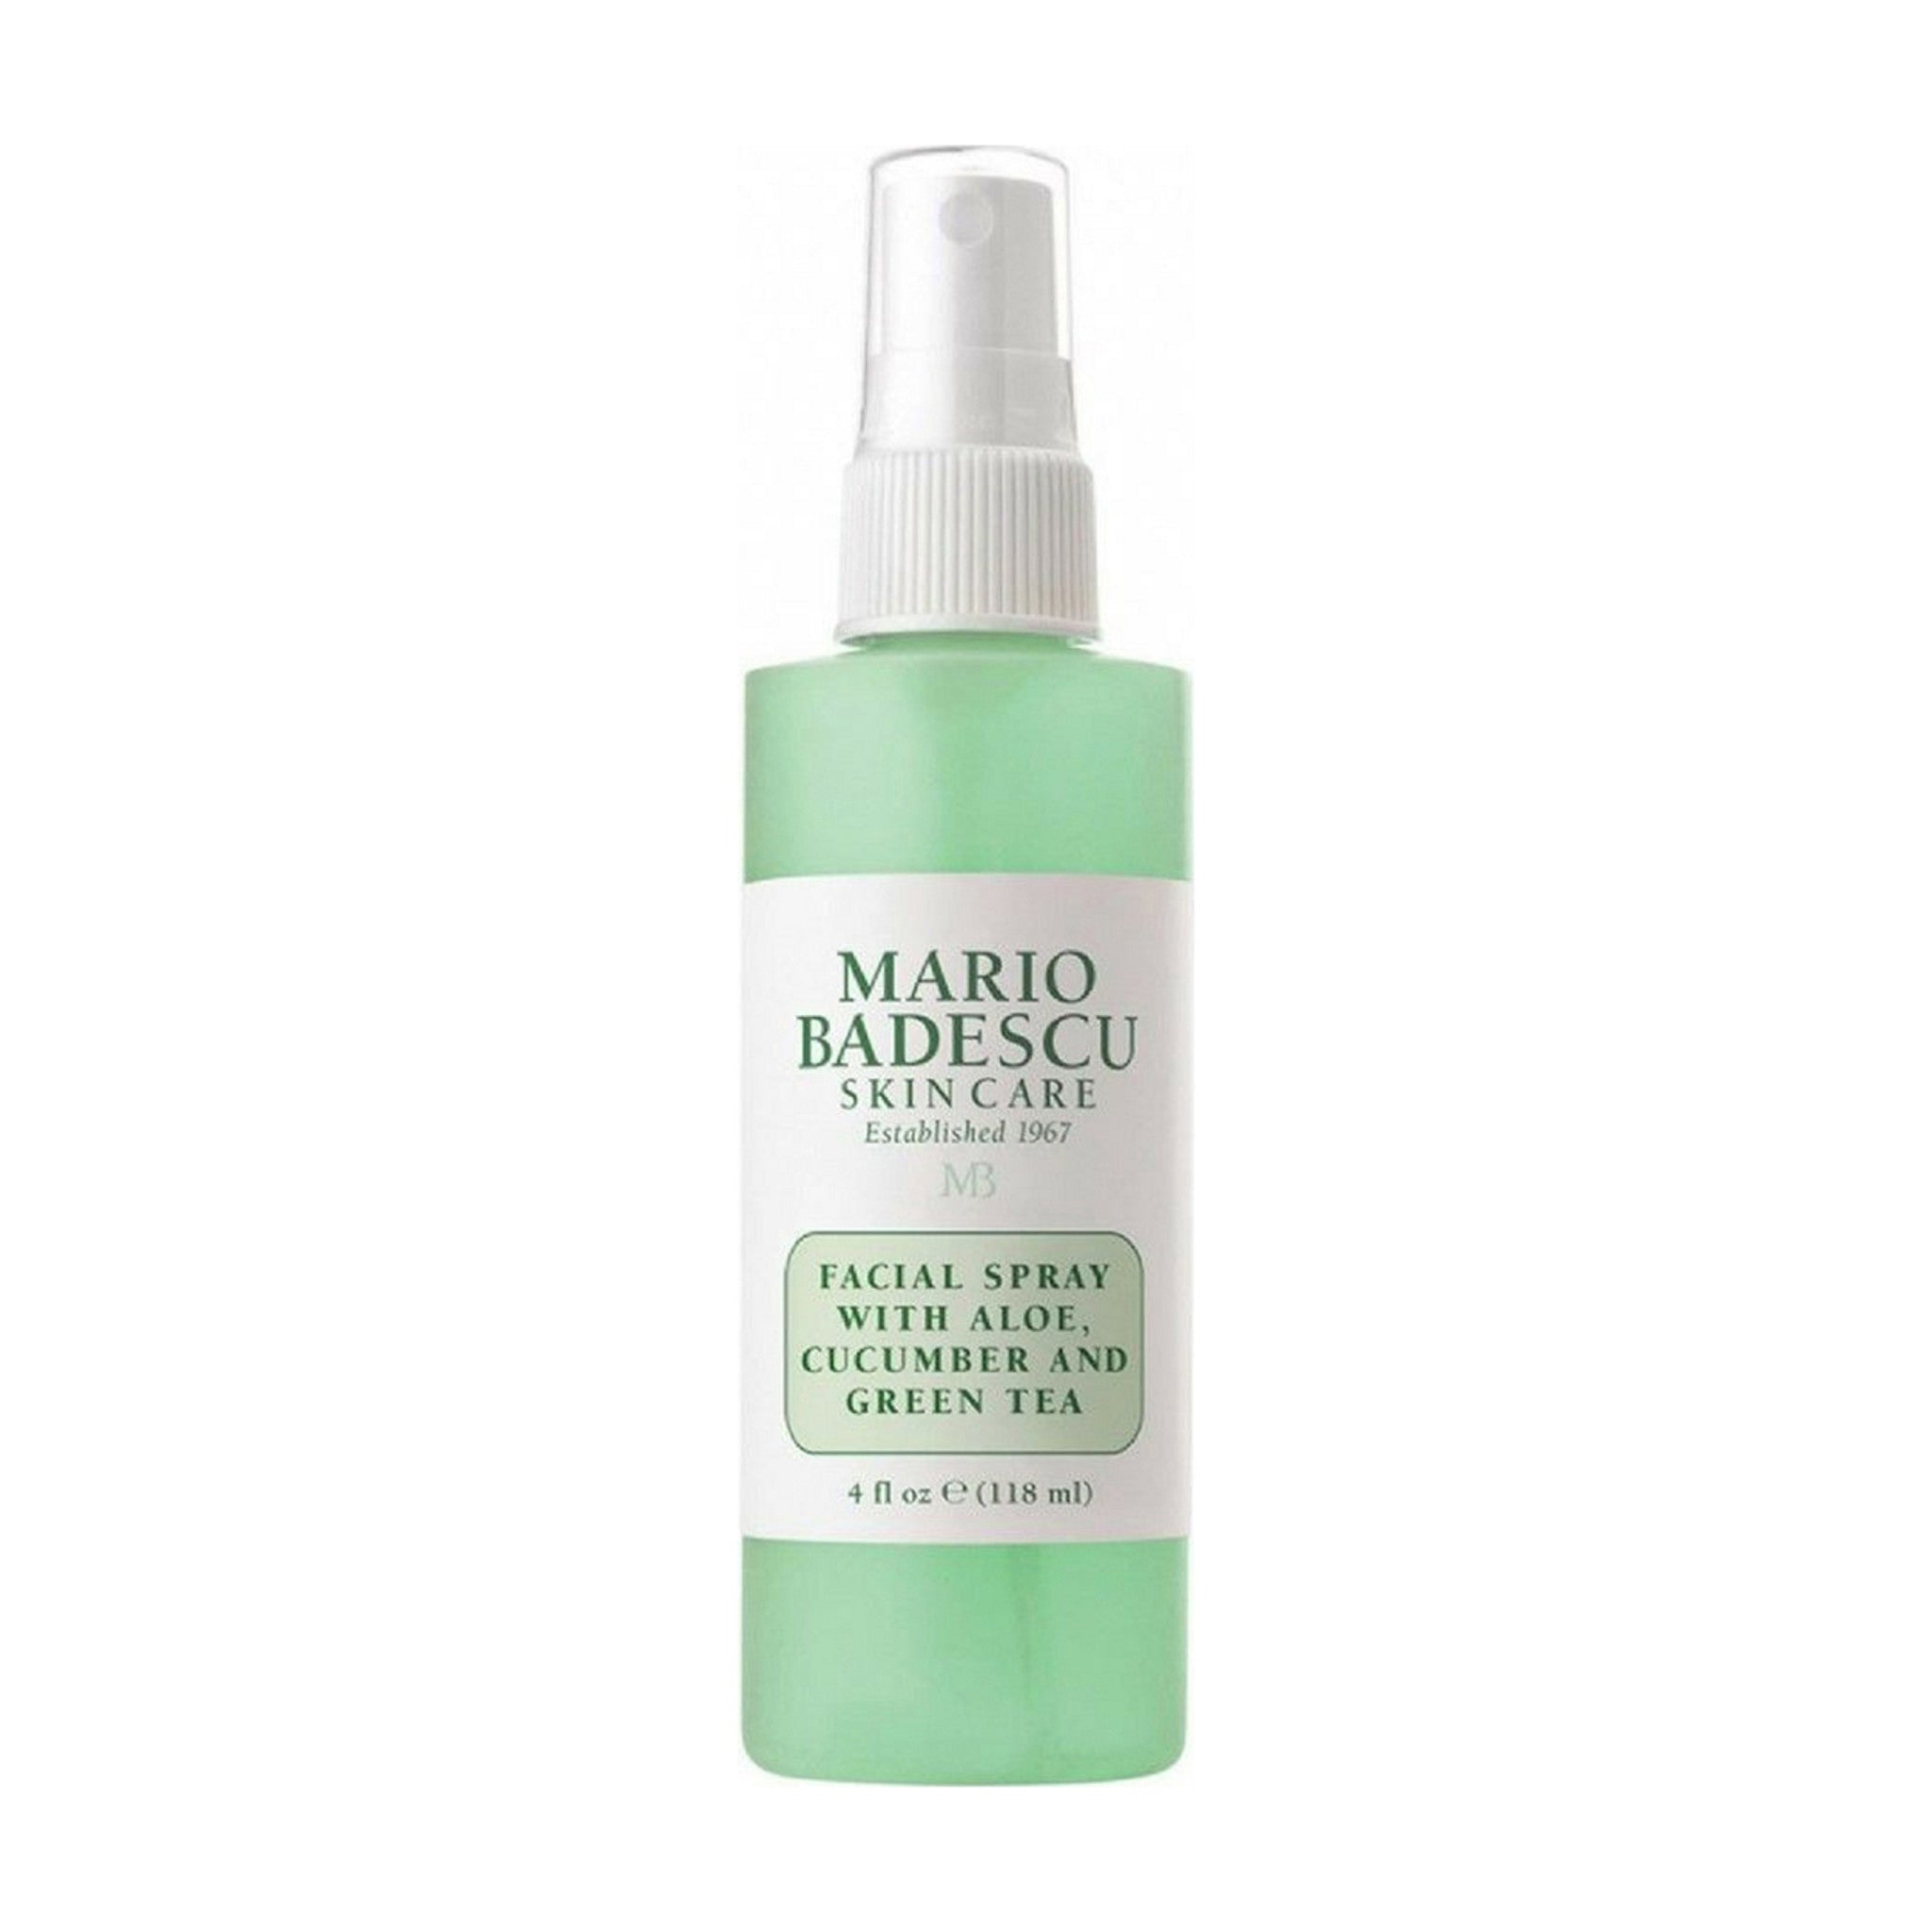 Mario Badescu Facial Spray With Aloe, Cucumber and Green Tea Size variant: 4 fl oz | 118 ml main image.